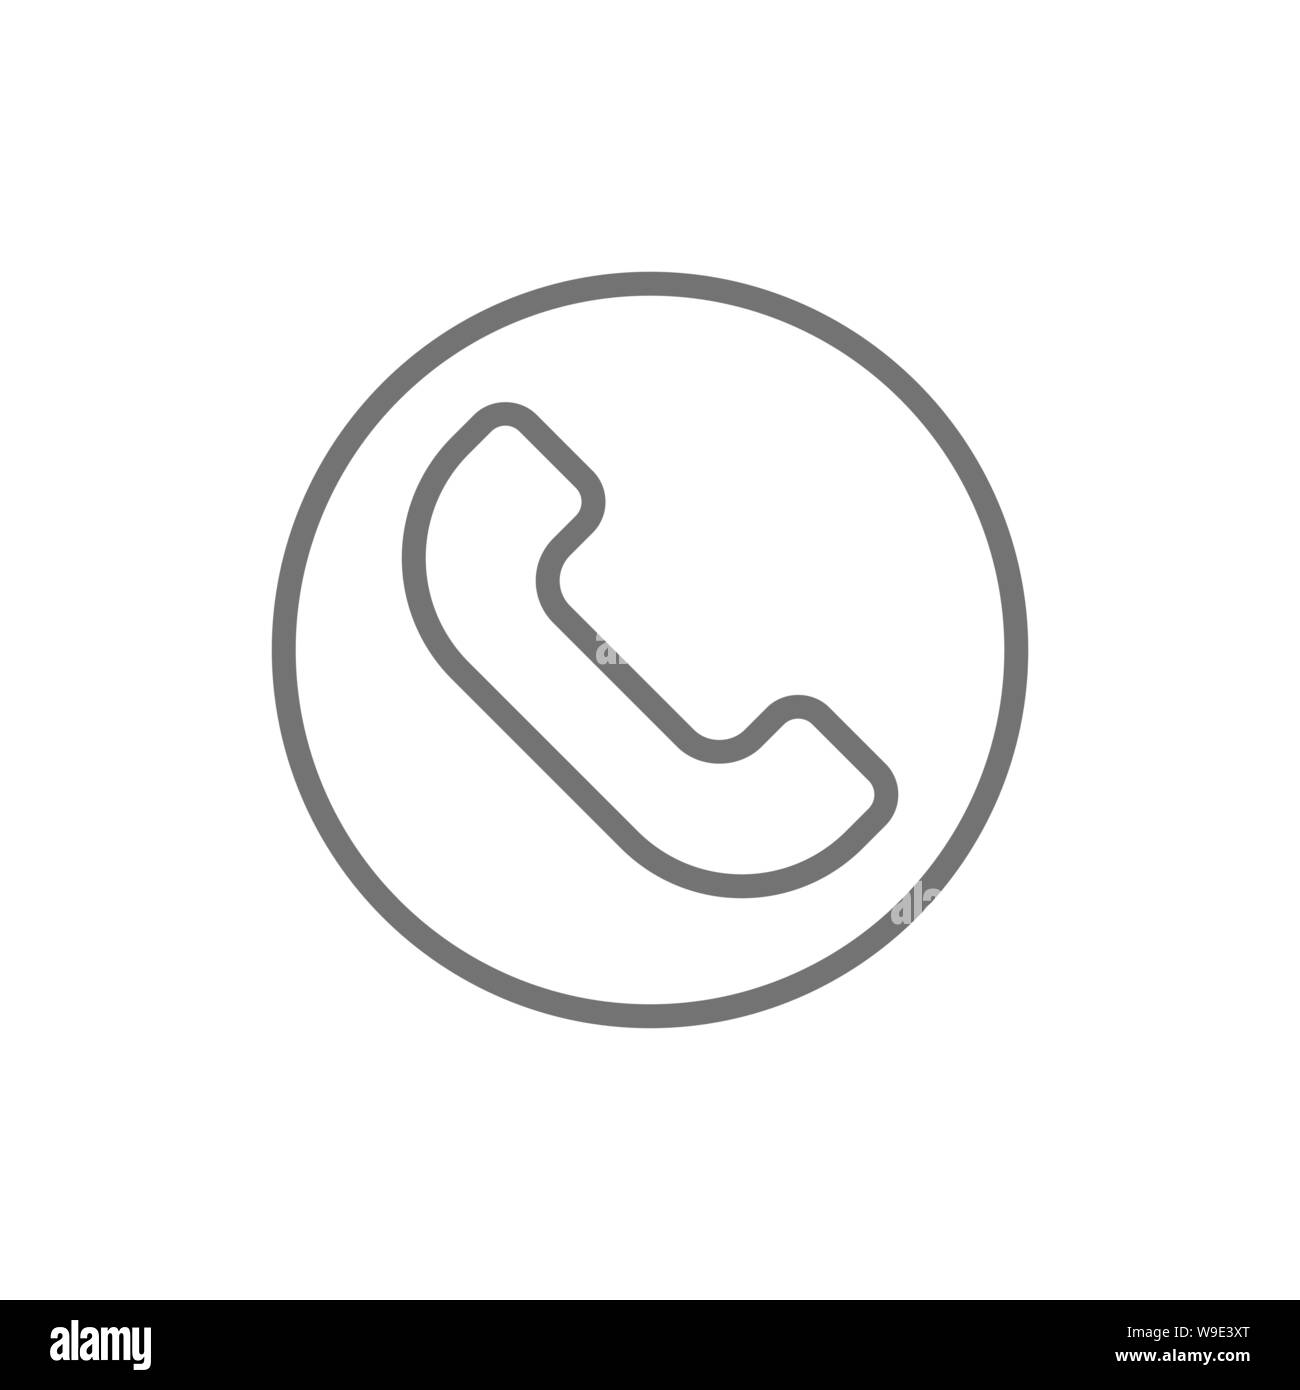 Phone handset, call center, telephone line icon. Stock Vector